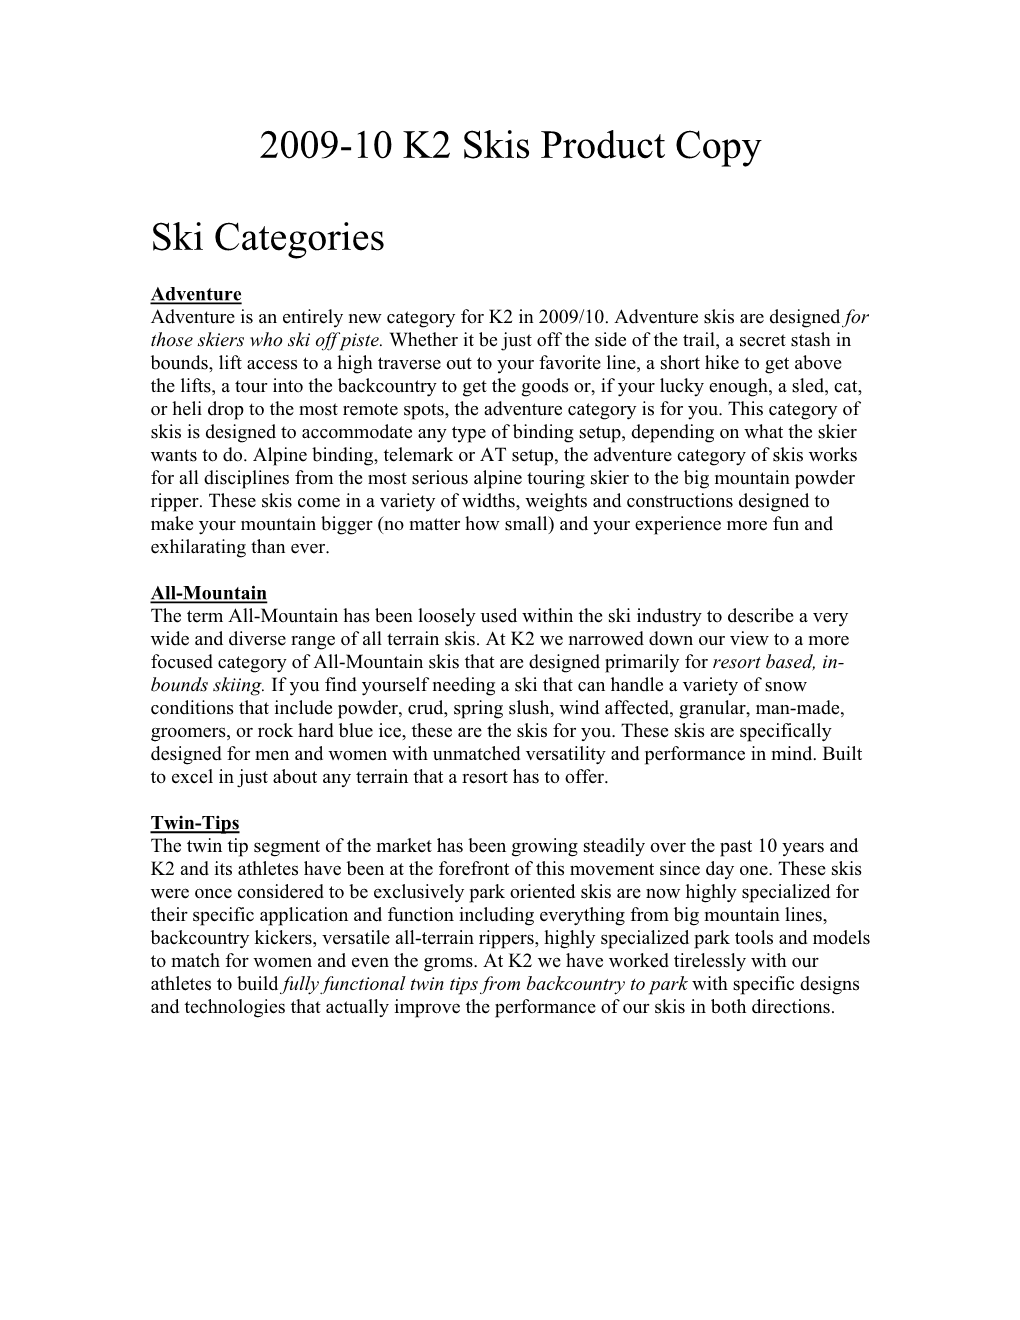 2009-10 K2 Skis Product Copy Ski Categories